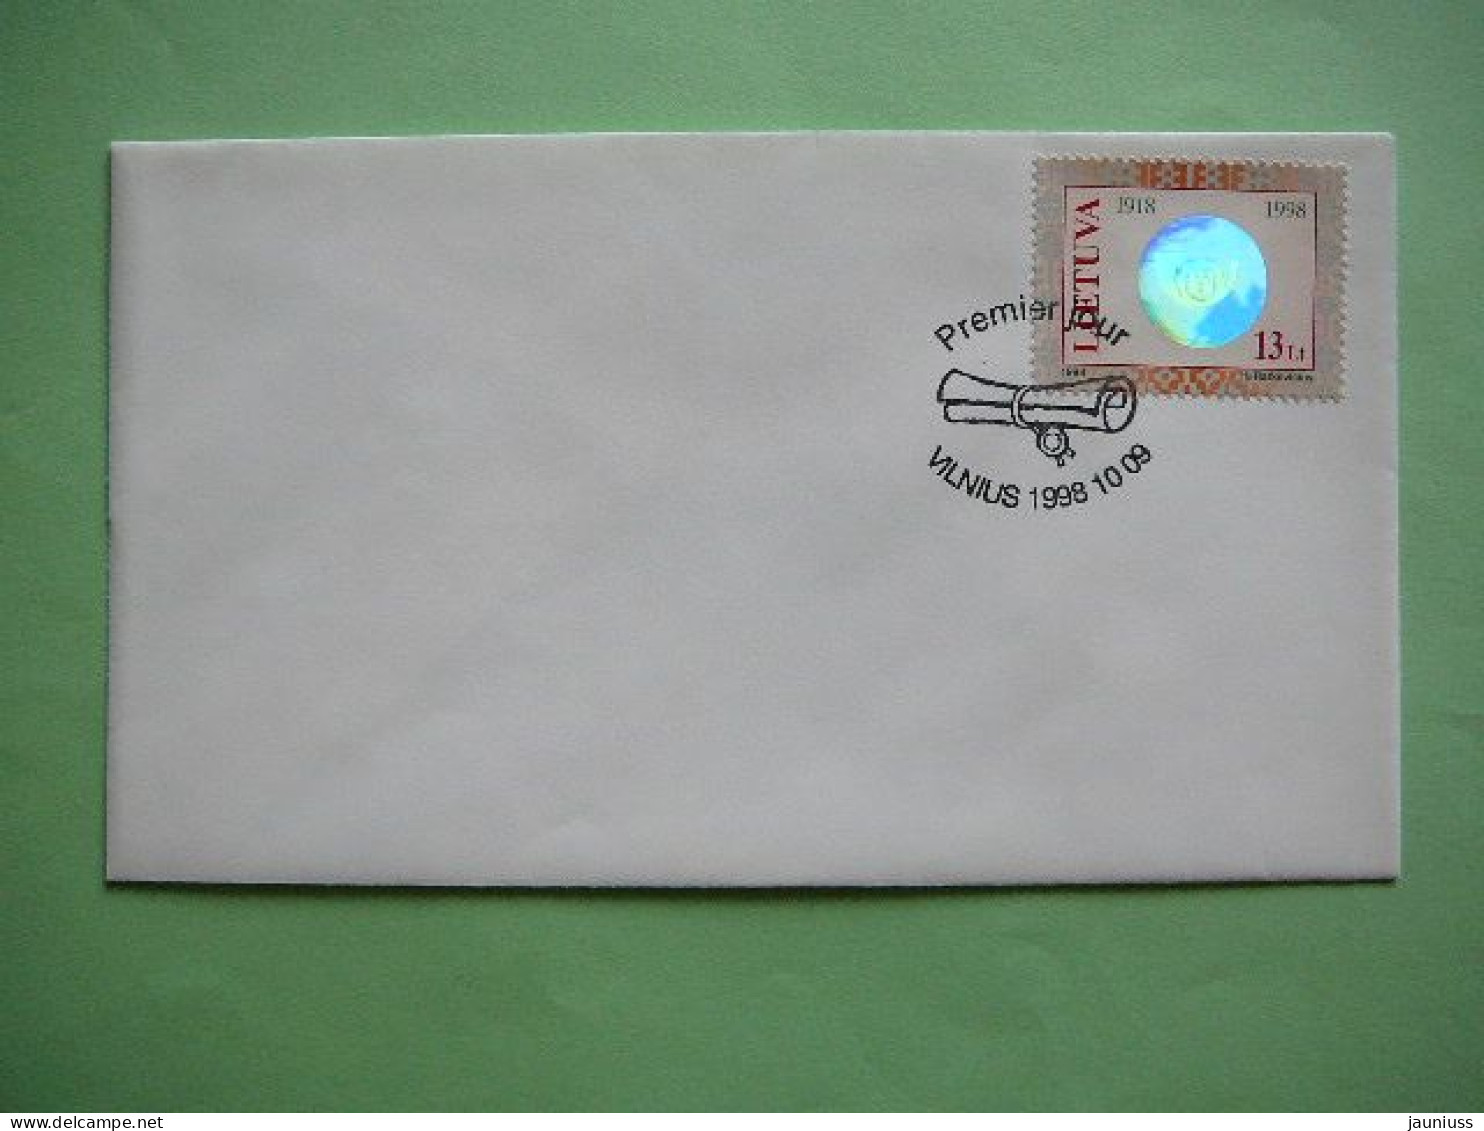 FDC - Postal History # Lietuva Litauen Lituanie Litouwen Lithuania 1998 #Mi.677 - Lituanie